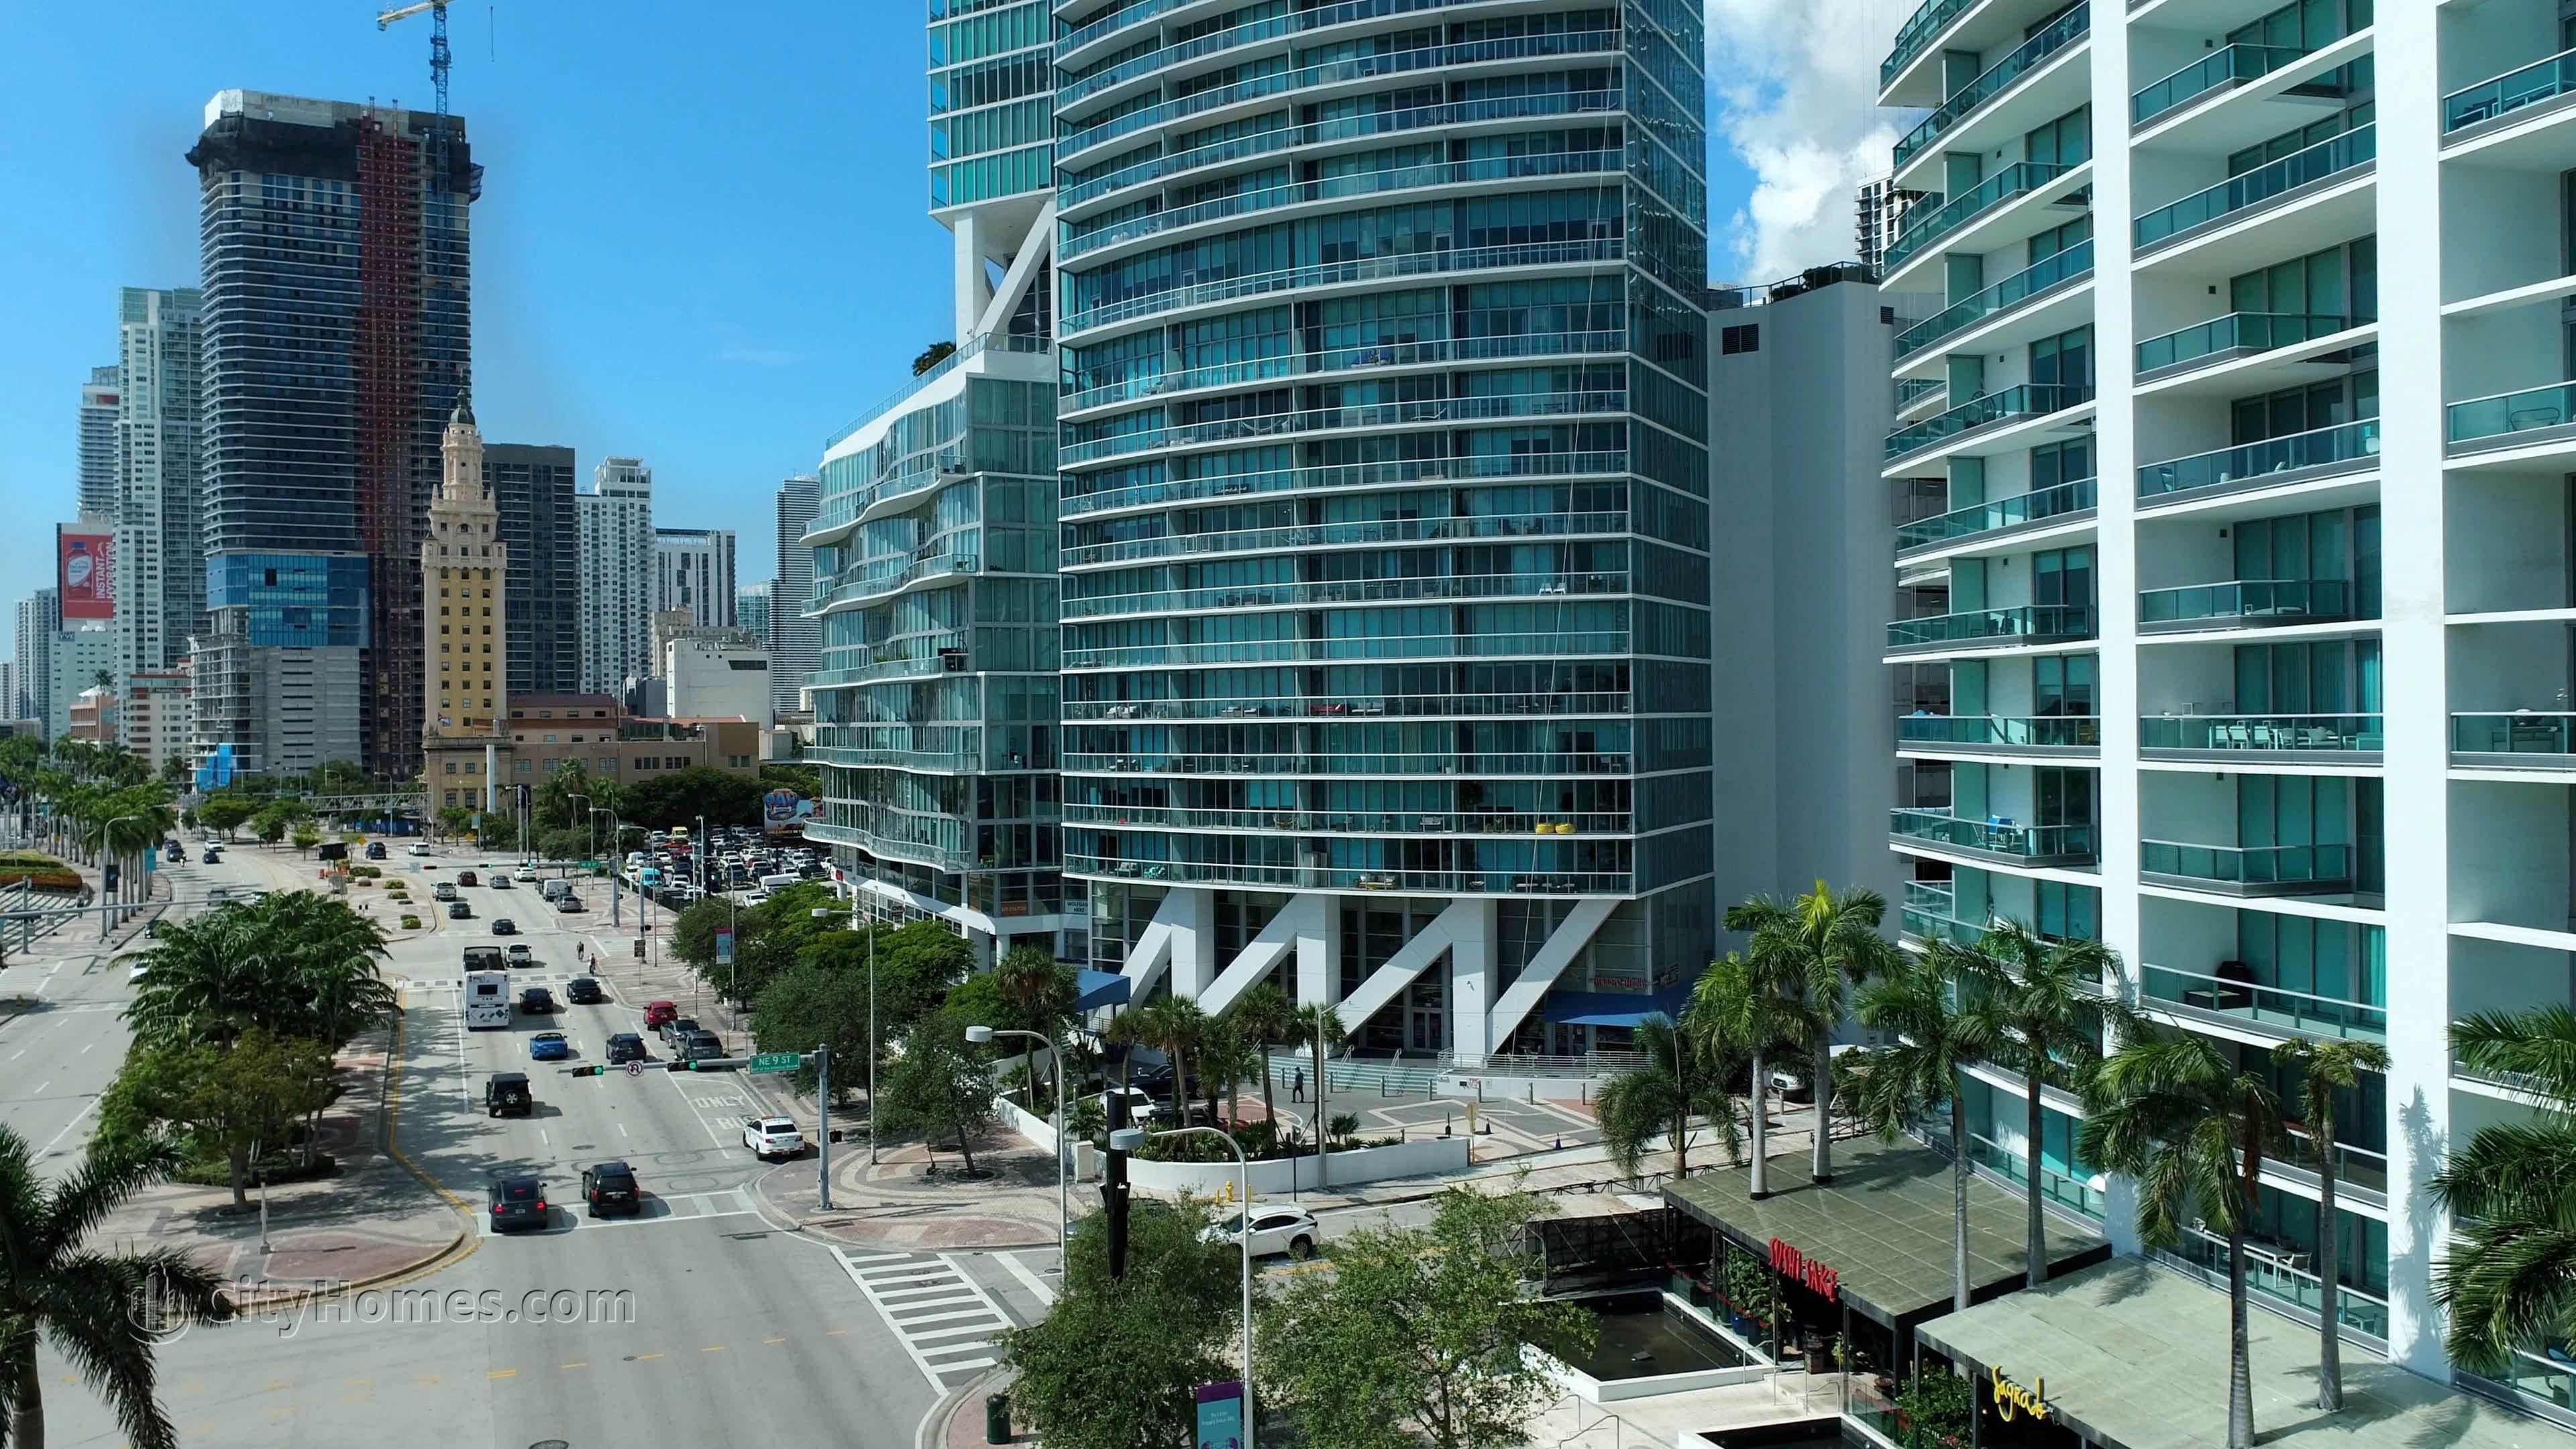 Marina Blue building at 888 Biscayne Blvd, Miami, FL 33132